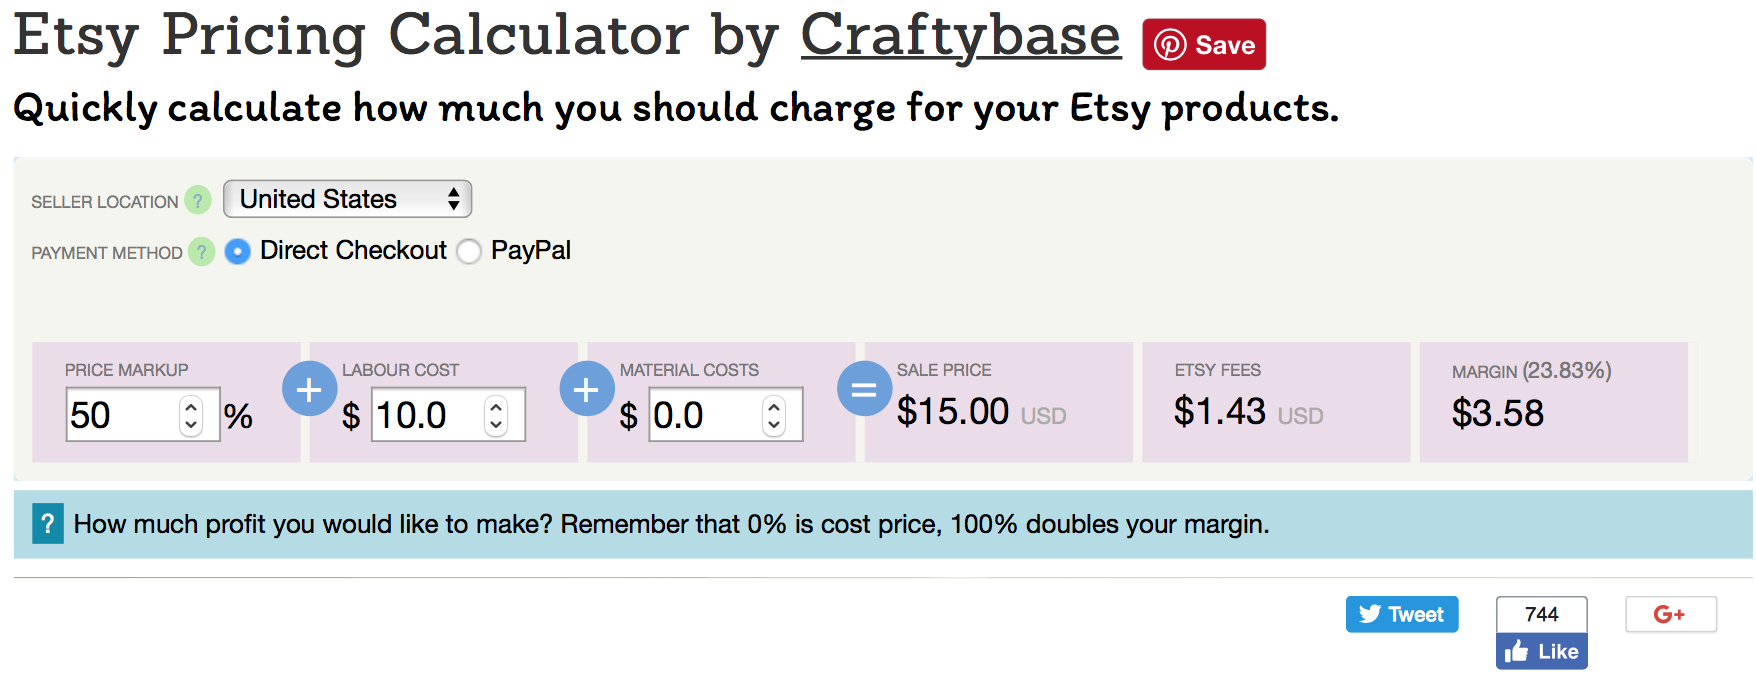 etsy pricing calculator